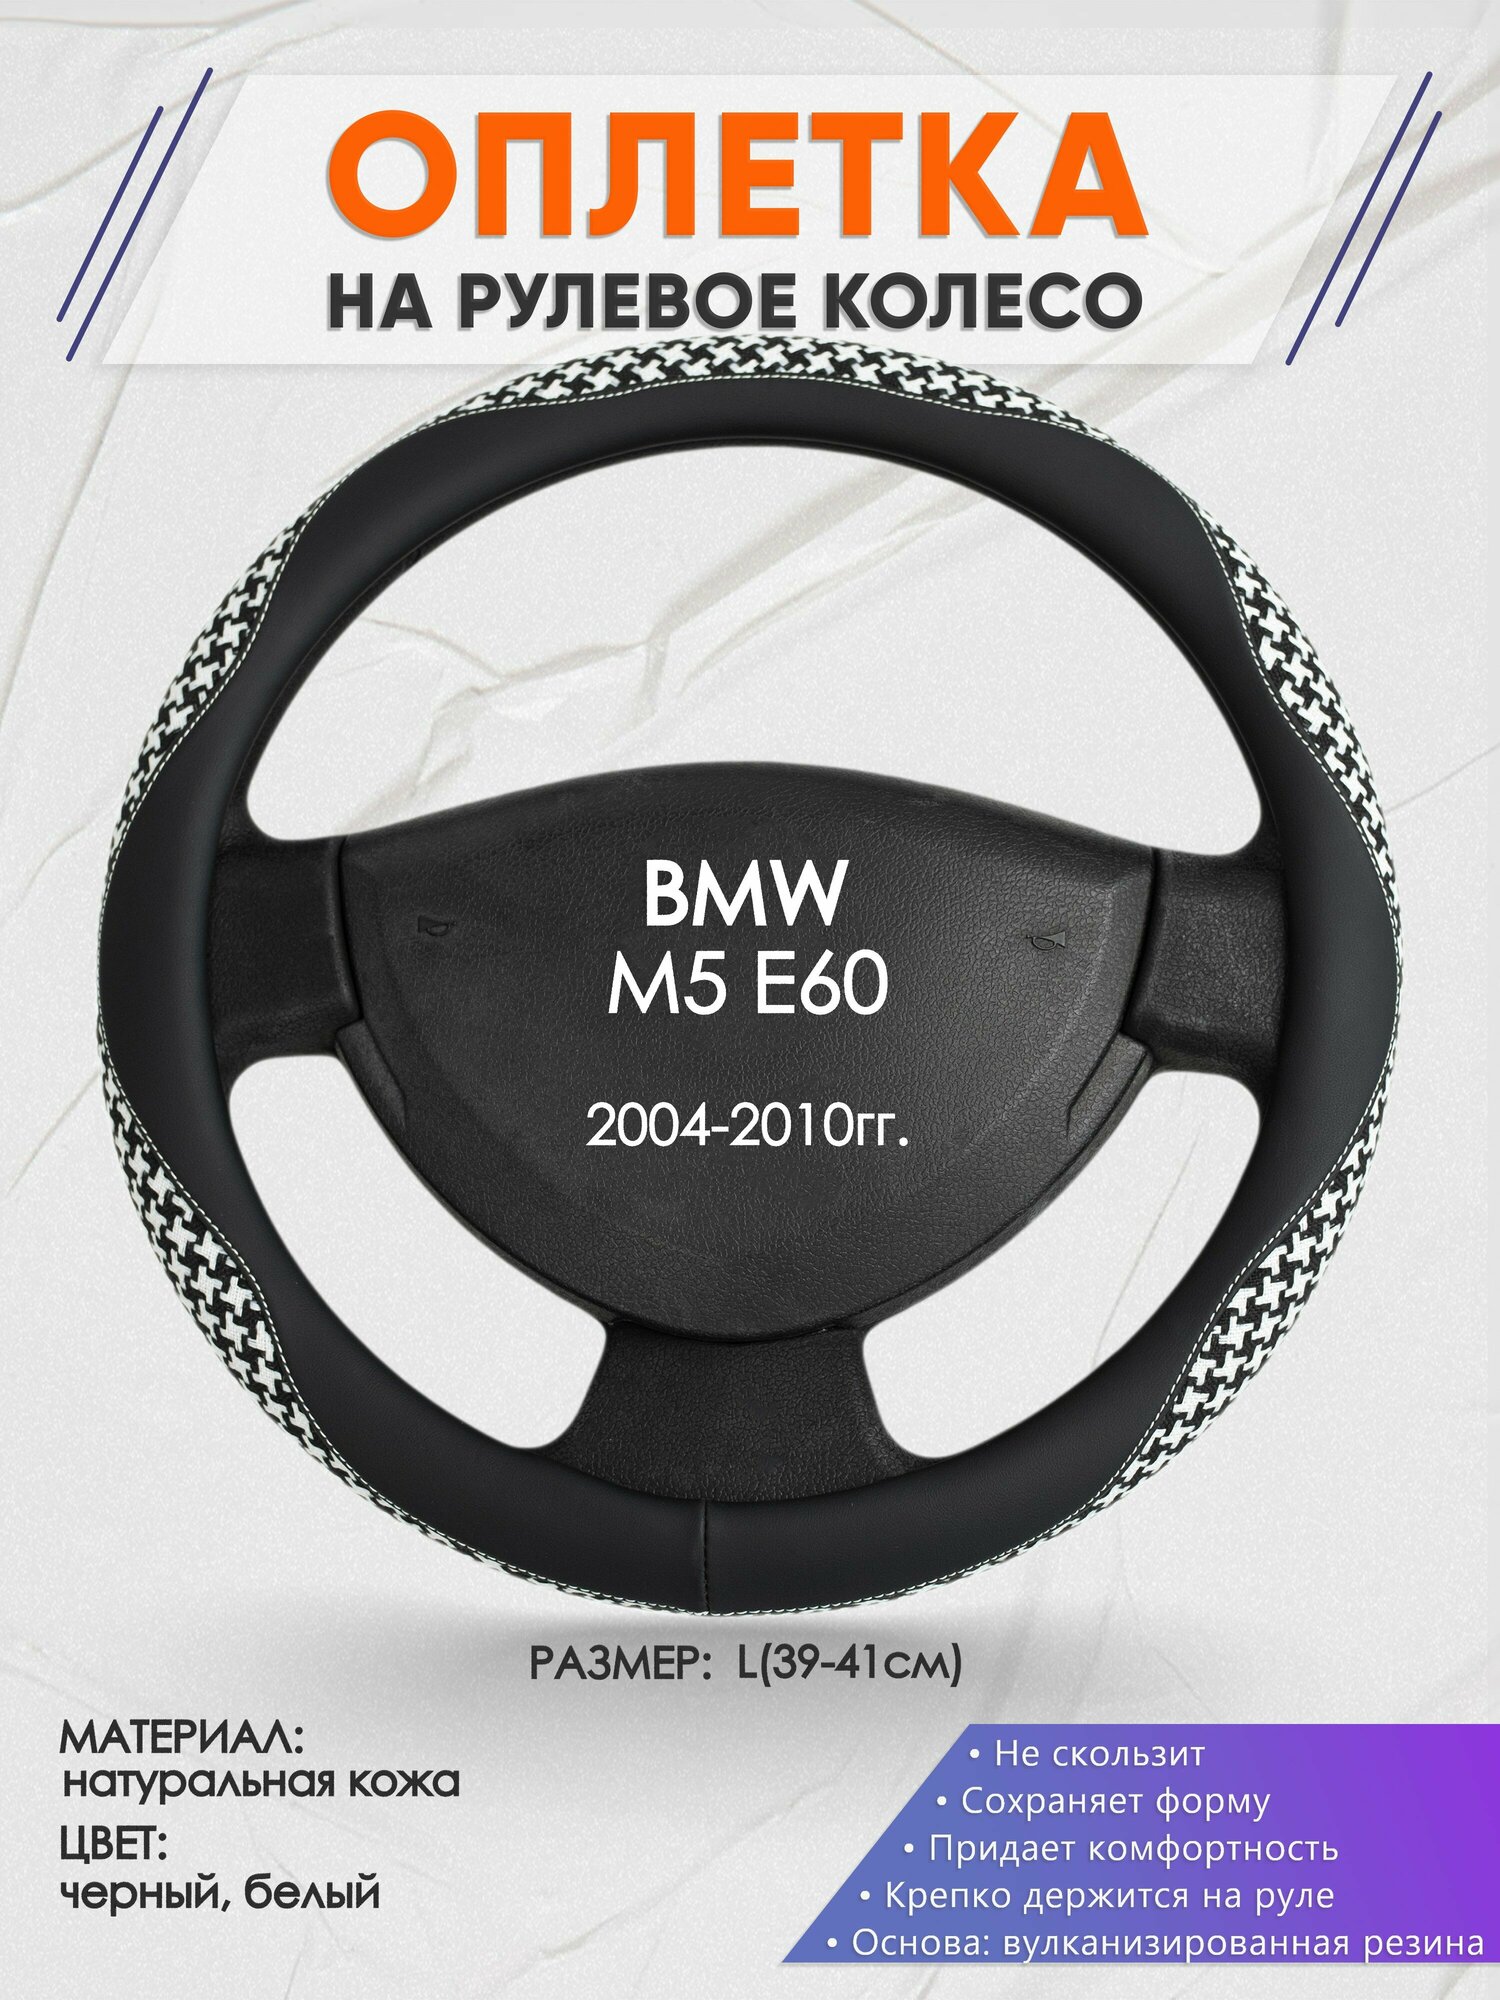 Оплетка на руль для BMW M5 E60(БМВ м5 е60) 2004-2010, L(39-41см), Натуральная кожа 21